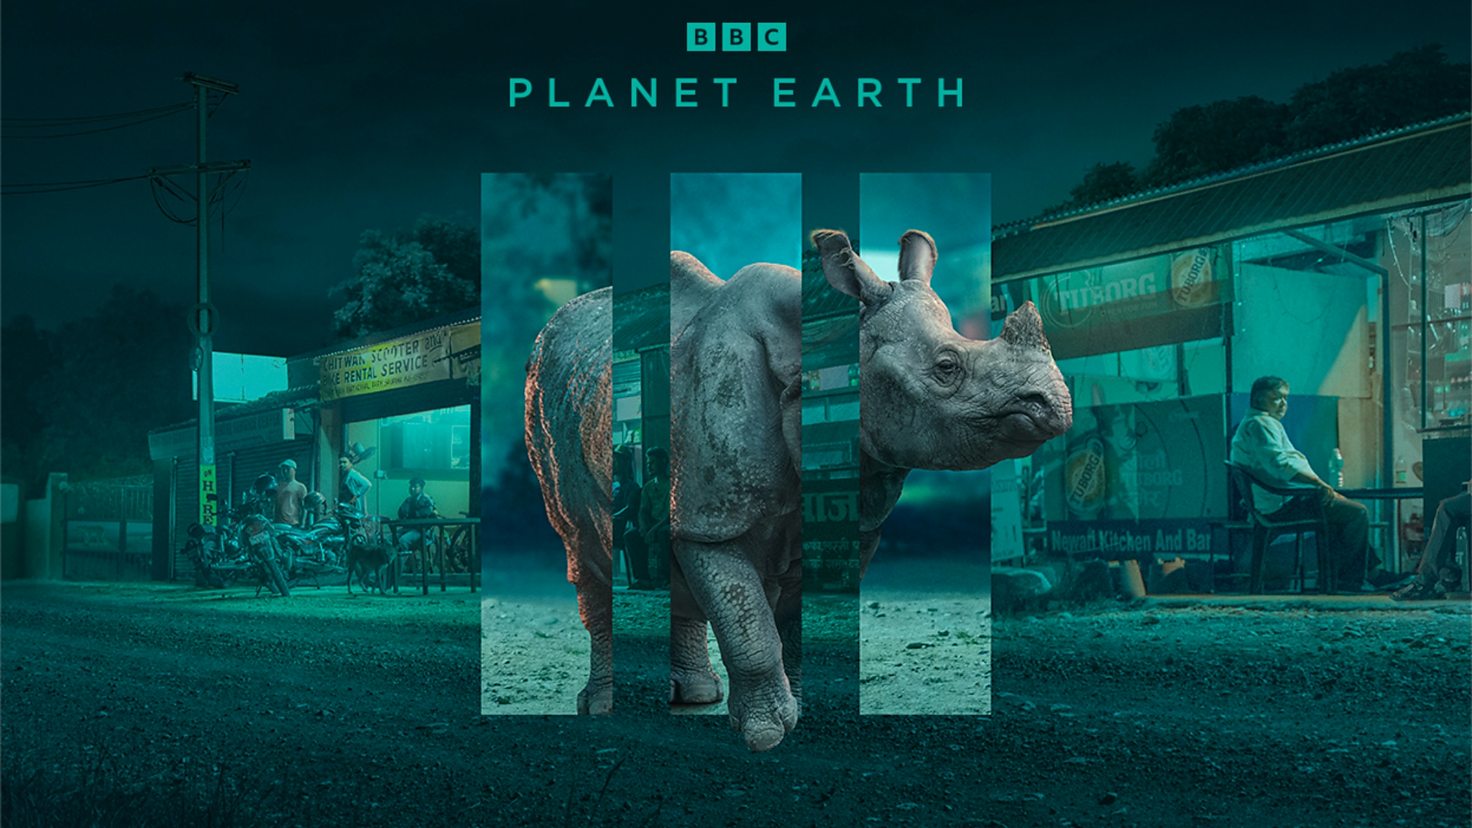 231129 BBC Planet Earth II